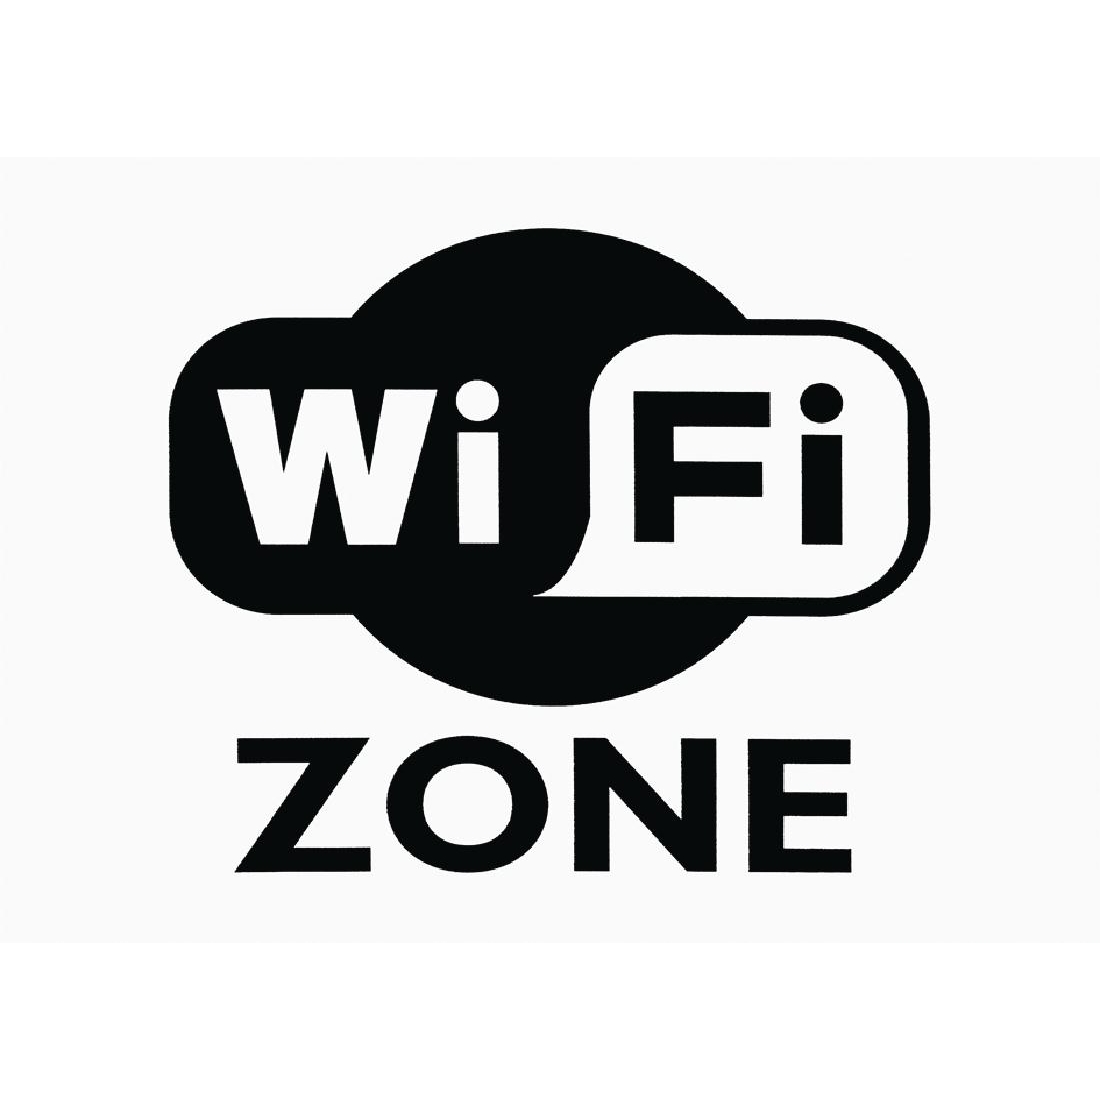 Wi products. Табличка "Wi-Fi". Вай фай зона табличка. Значок Wi-Fi. Наклейка "Wi-Fi".